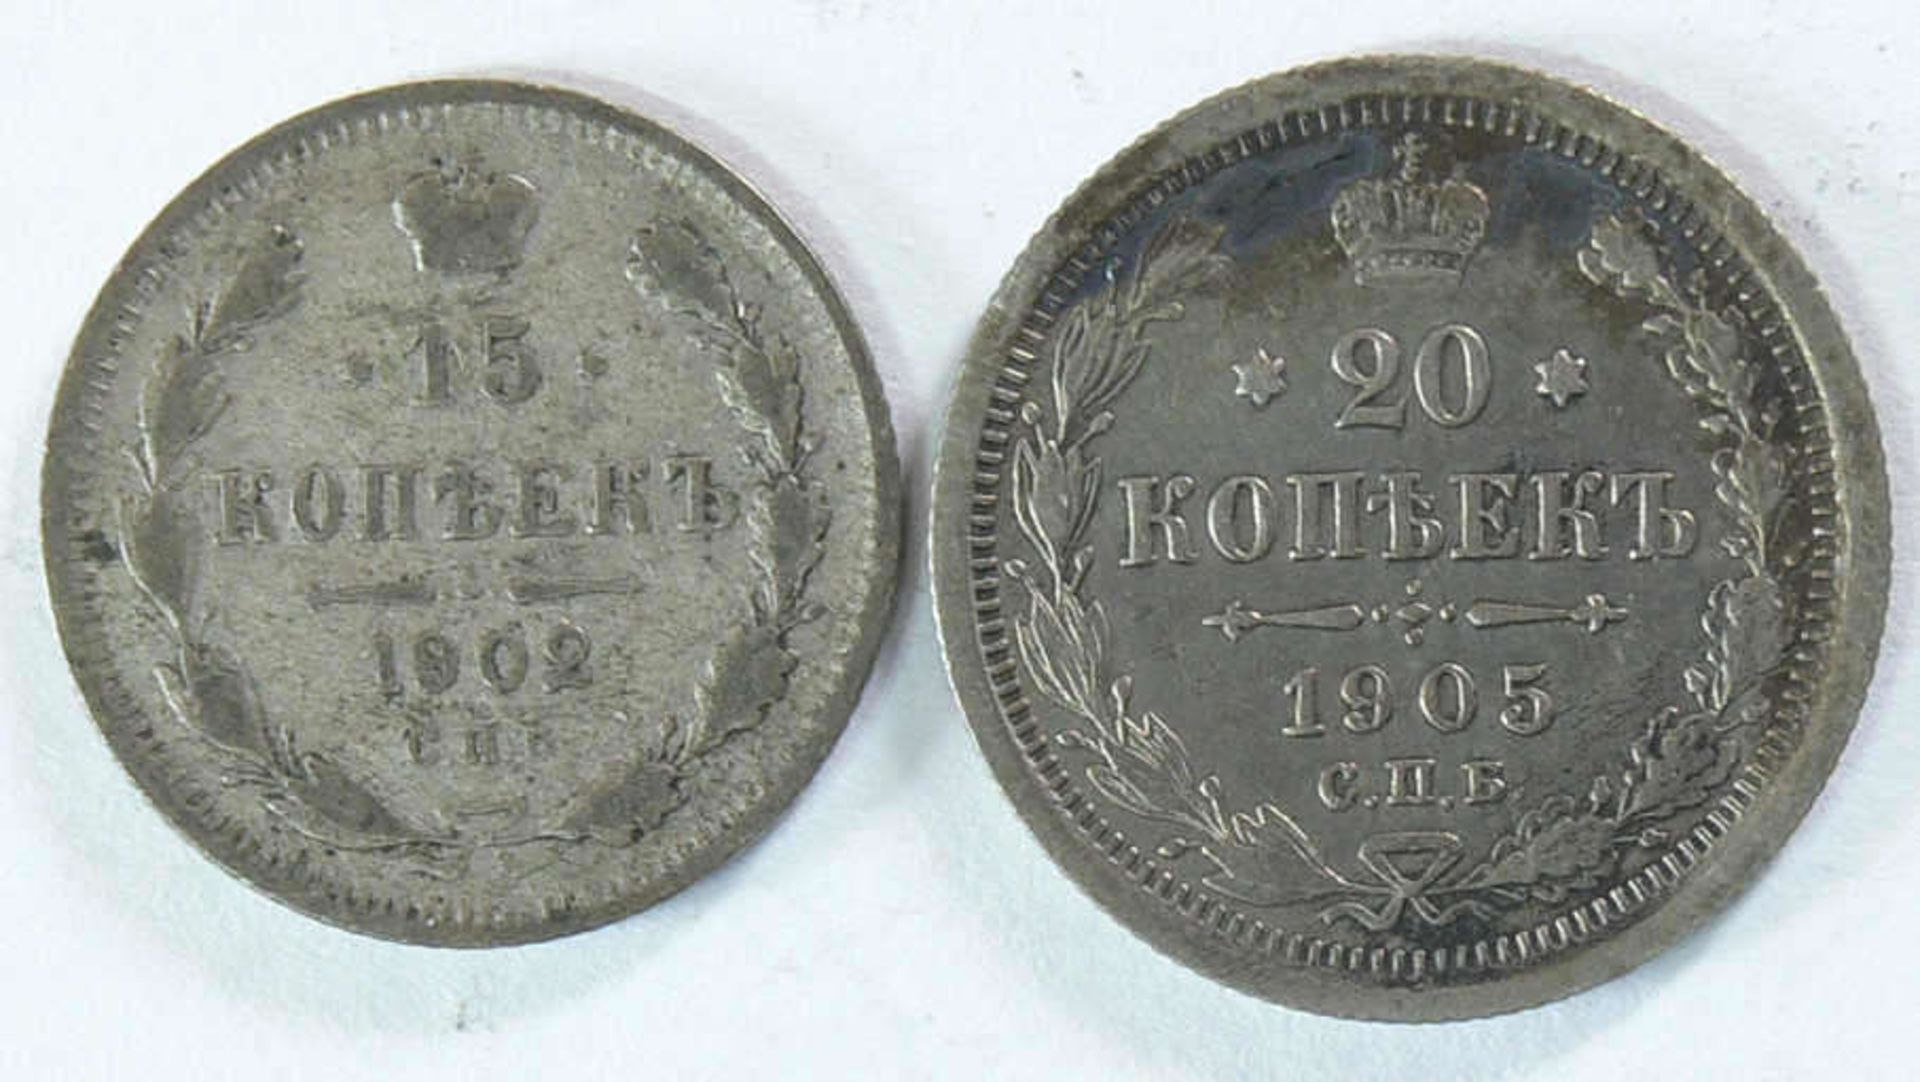 Russland 1902/05, 1 x 15 Kopeken und 1 x 20 Kopeken. Silber. Erhaltung: ss.